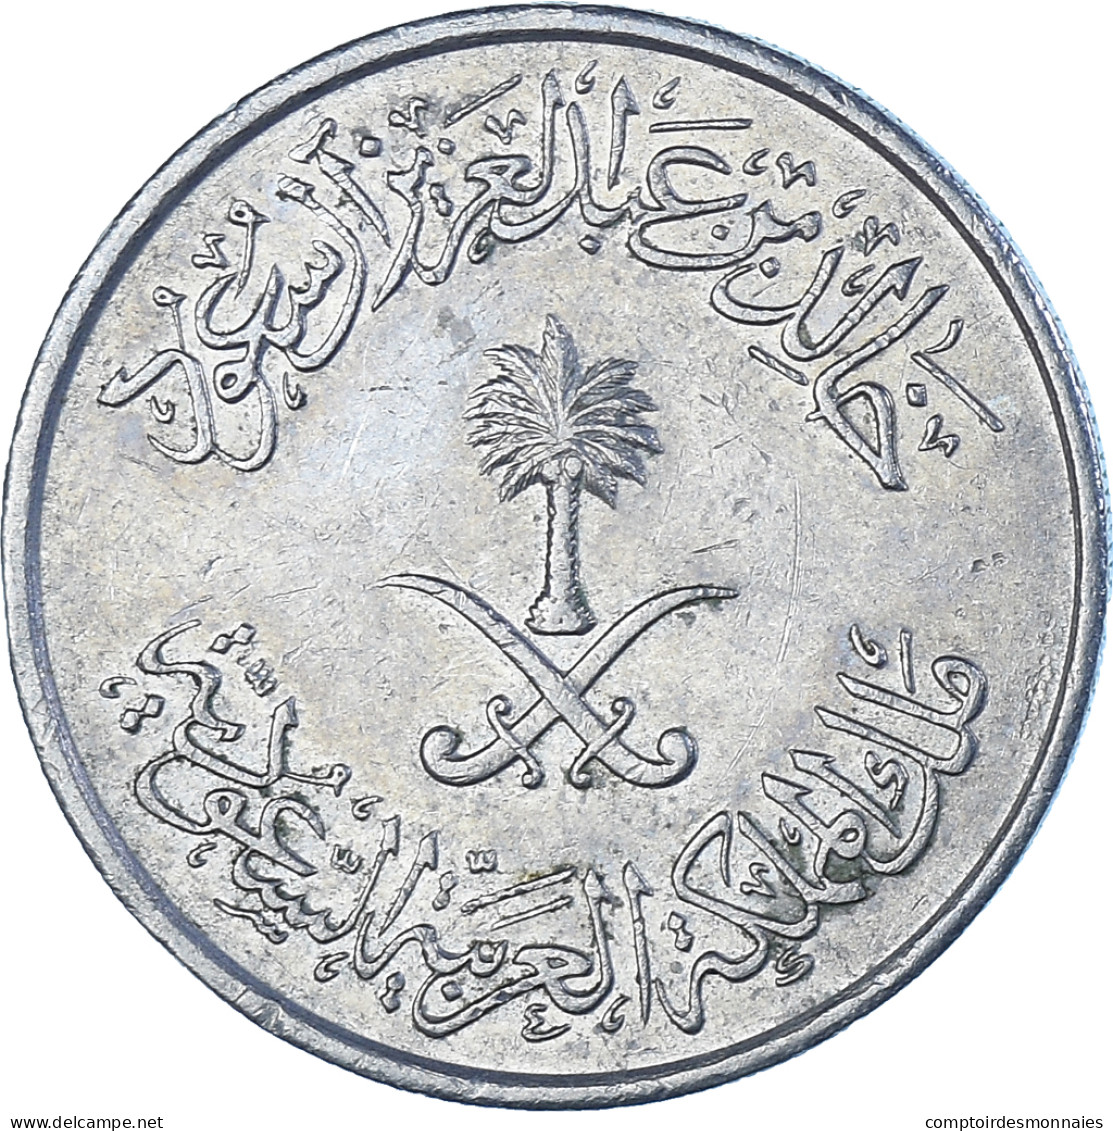 Arabie Saoudite, 50 Halala, 1/2 Riyal, 1980 - Saudi Arabia